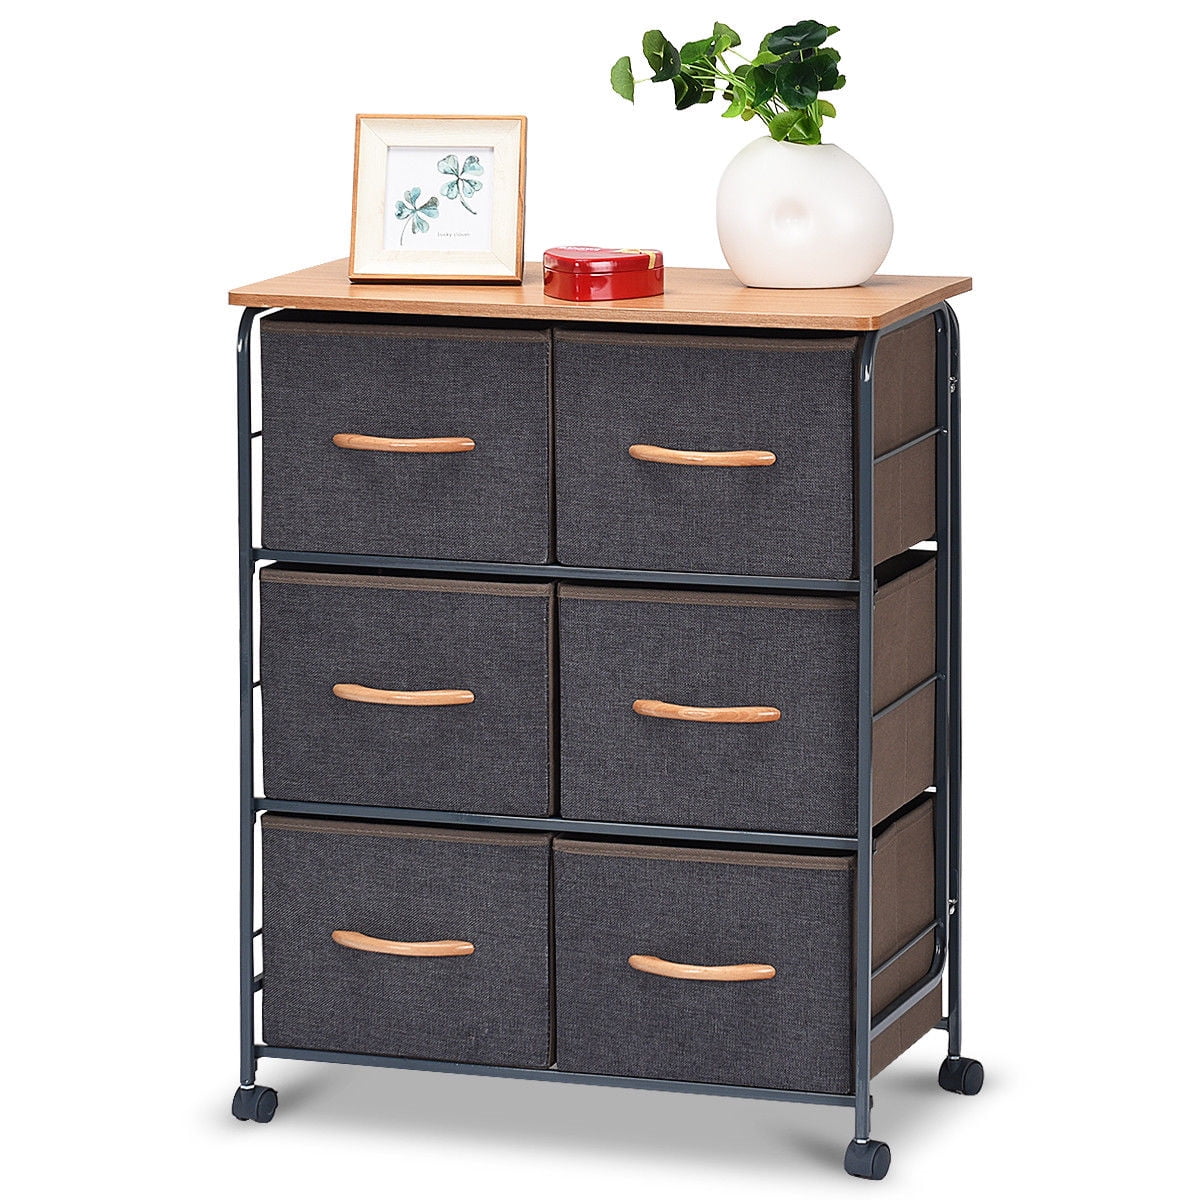 6 Drawer Fabric Storage Table Organizer Display Dresser Cabinet